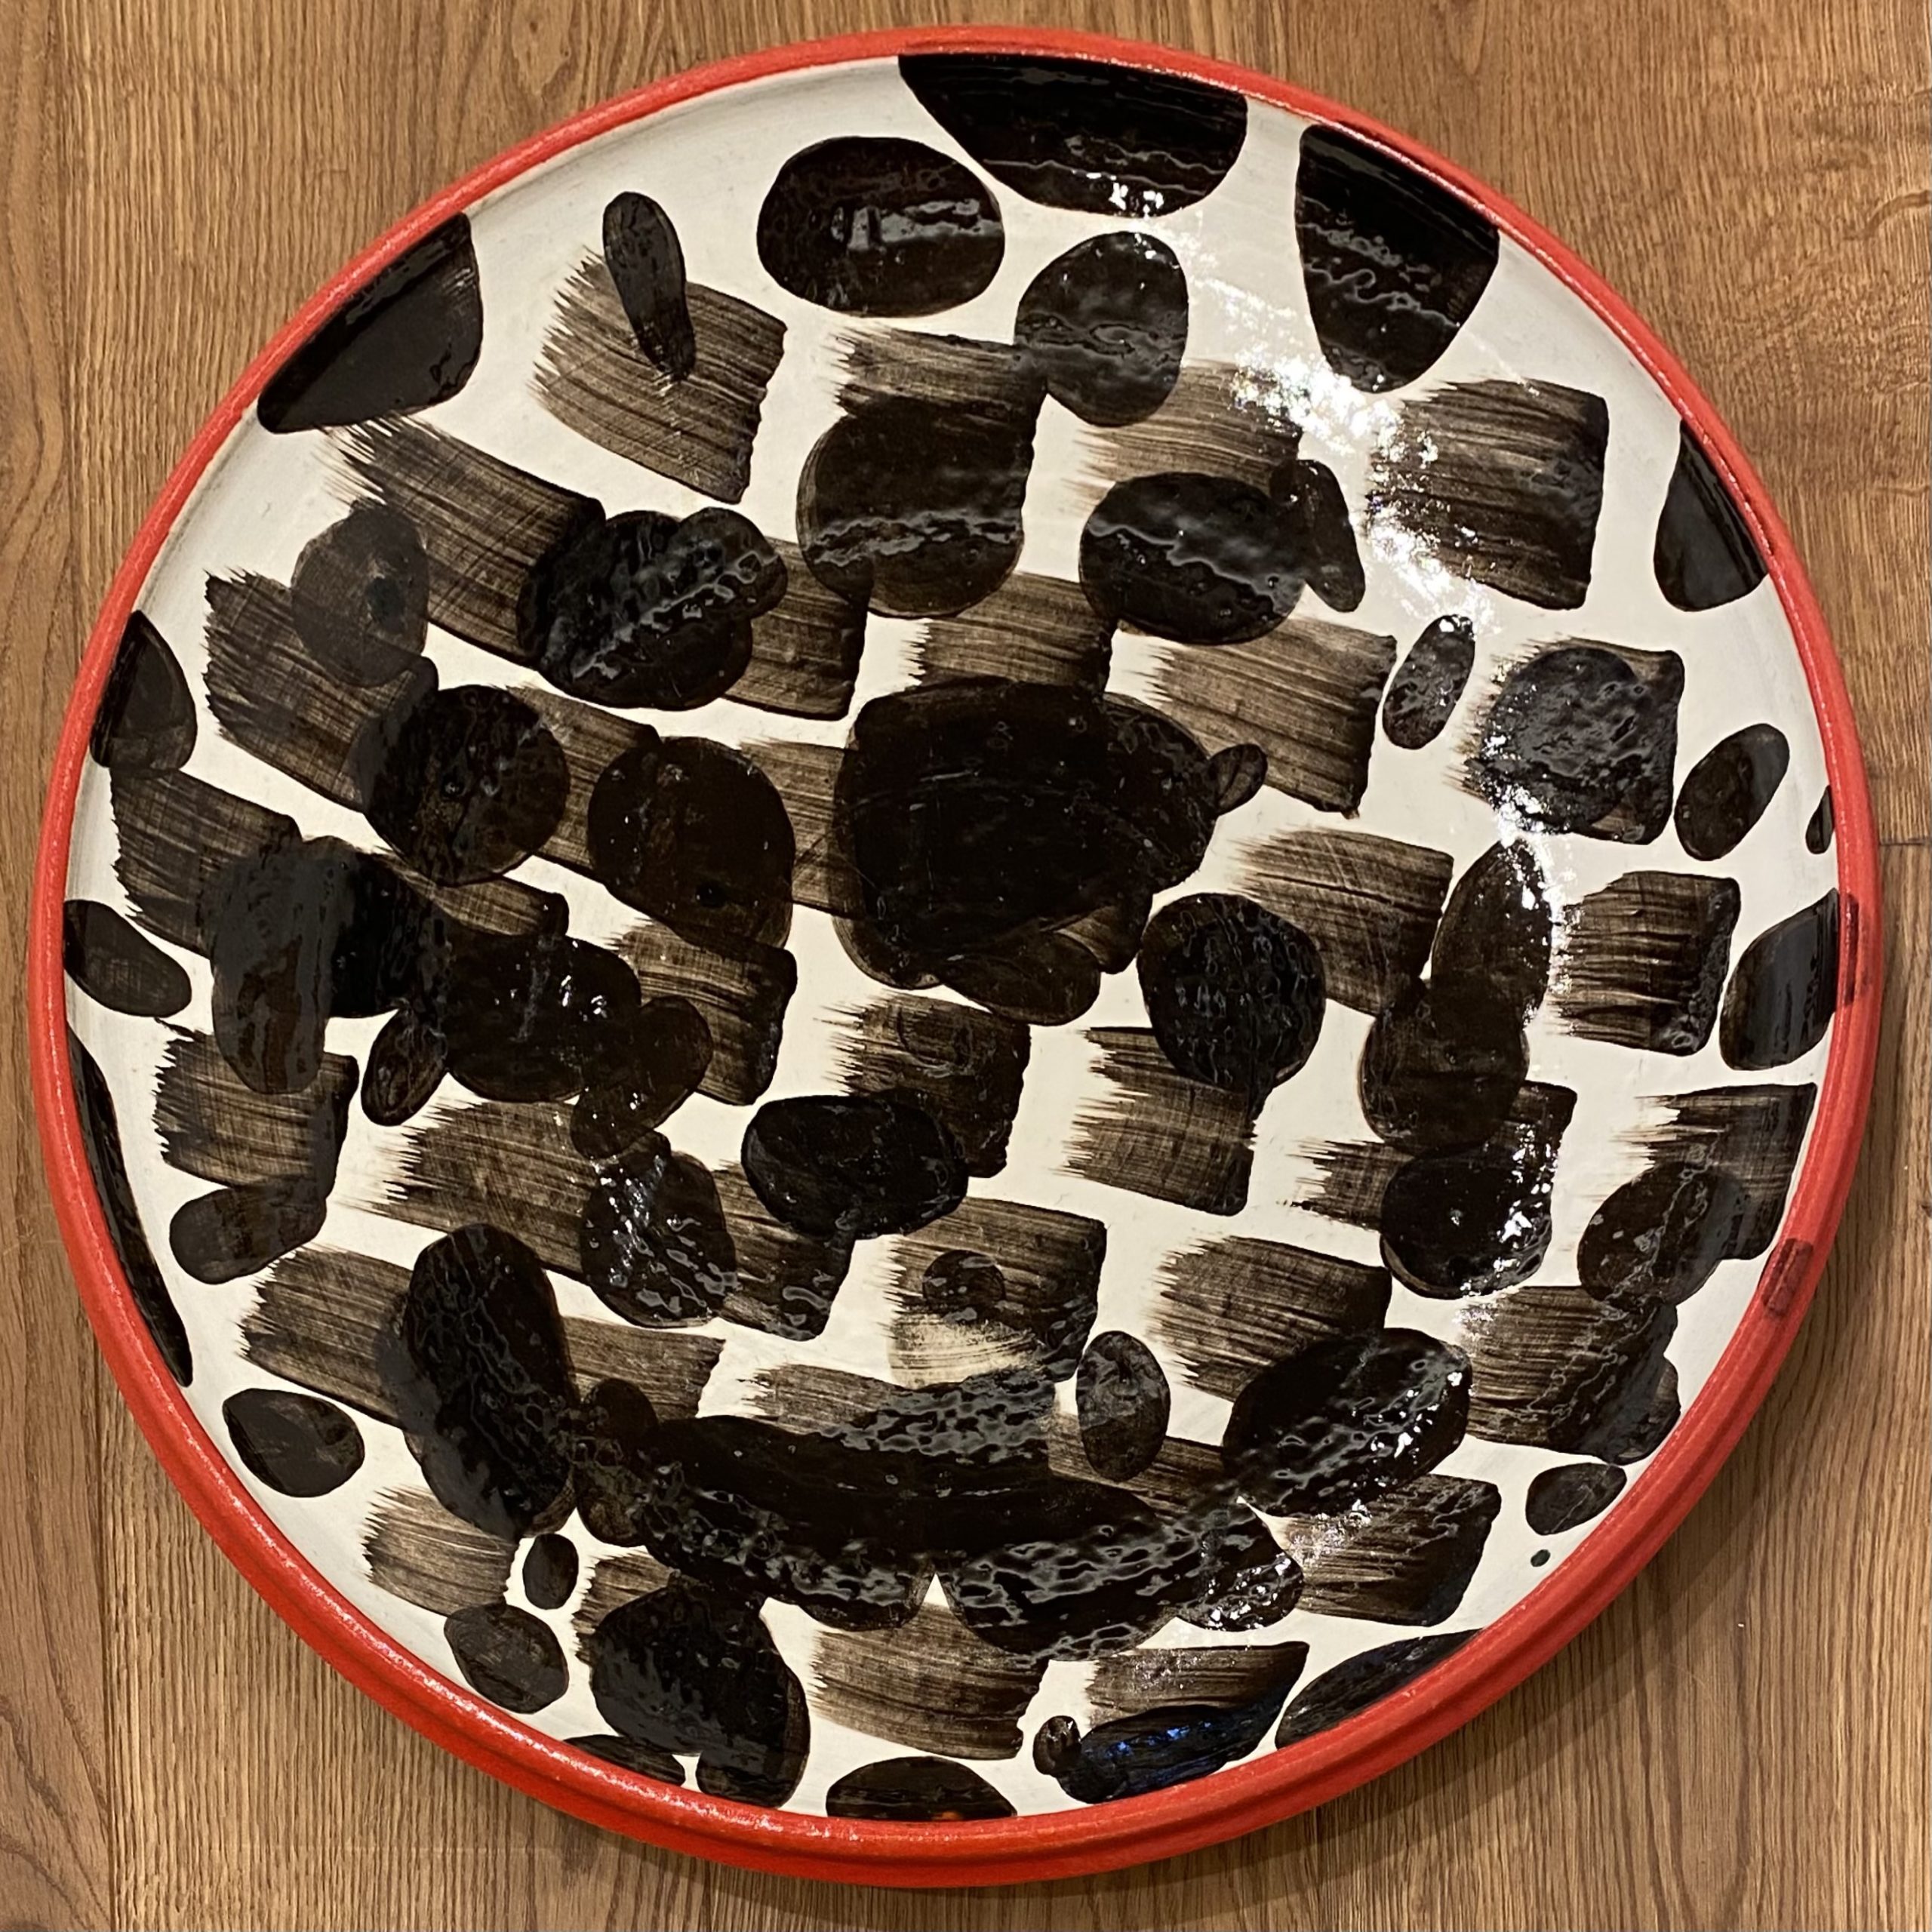 Black and White Platter 1  3 ½” x 19” diameter  White Stoneware with underglaze and clear glaze  $650